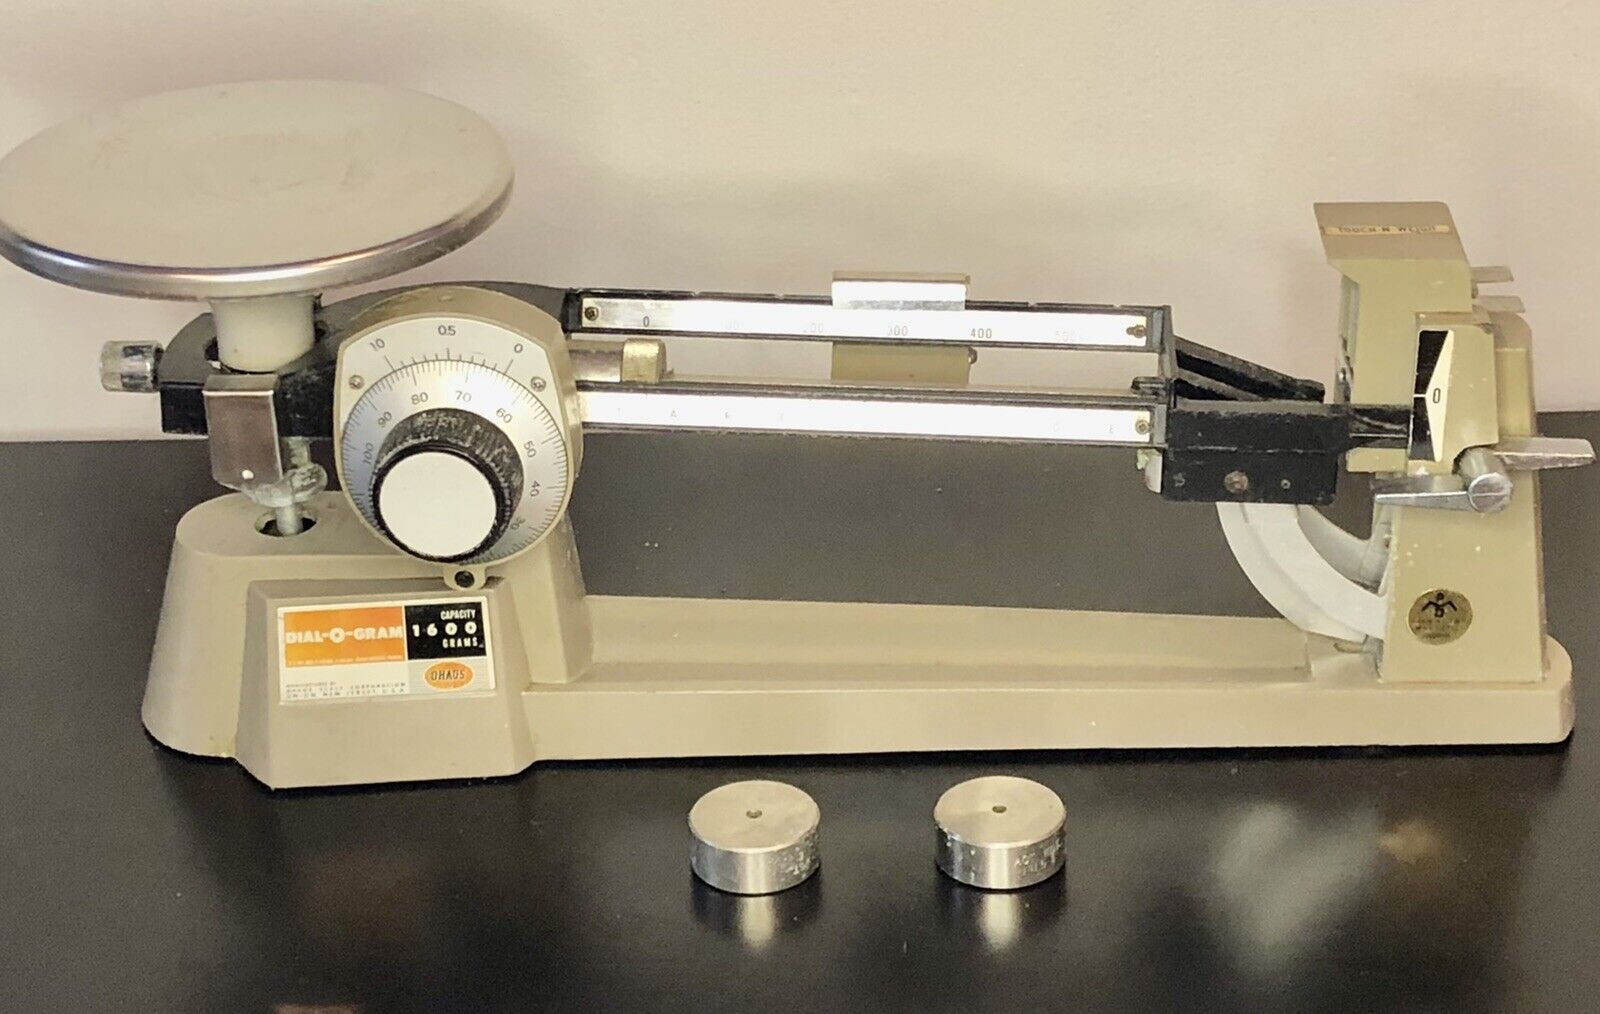 Vintage OHaus Dial-O-Gram 1600 Series Triple Beam Balance Scale